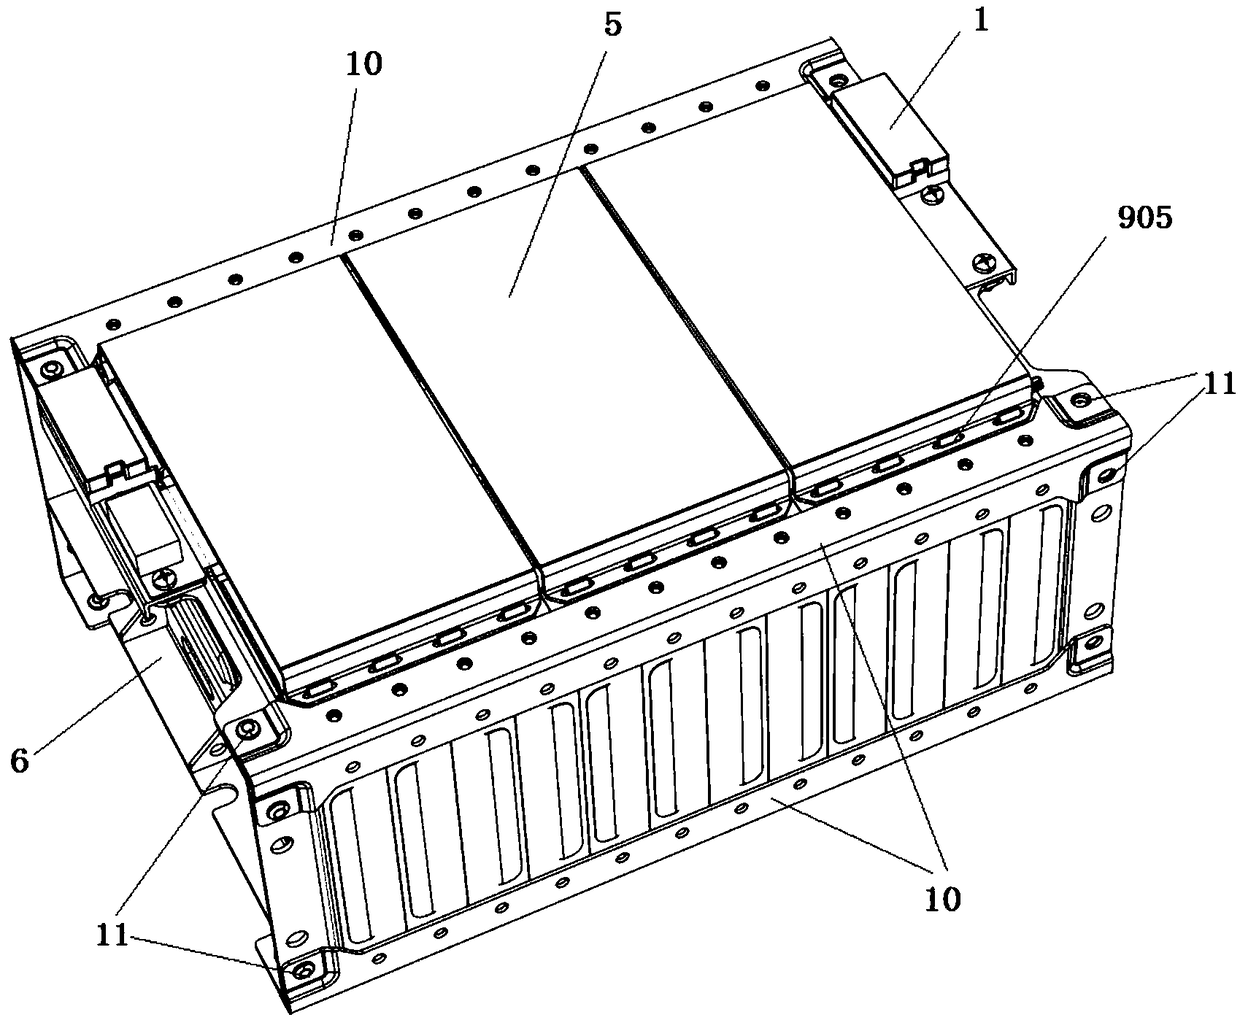 A high-energy-density soft-pack battery module